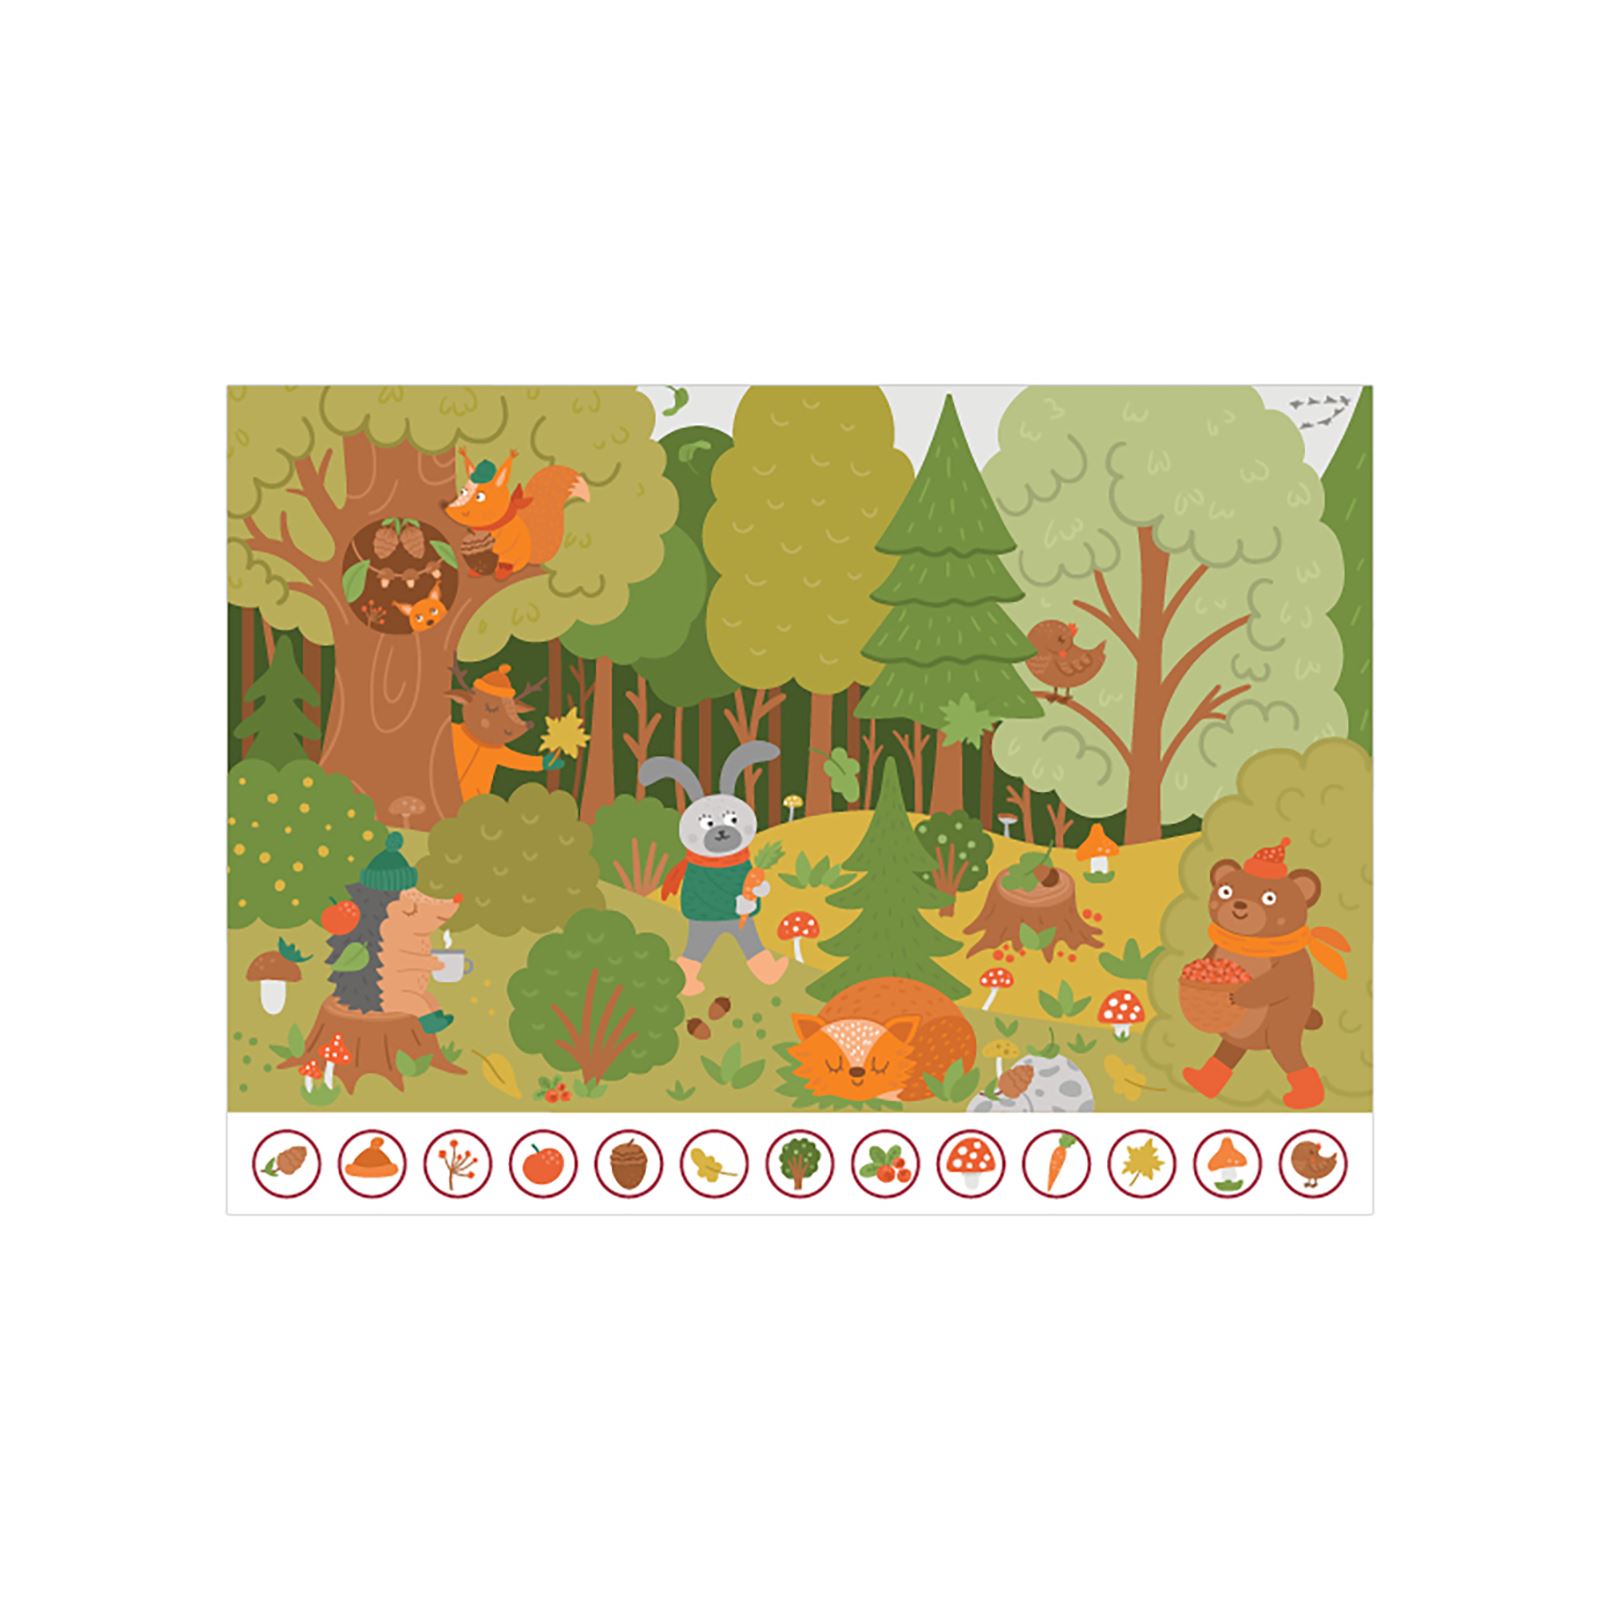 Neverland Sonbahar Ormanı Puzzle 50 Parça Renkli